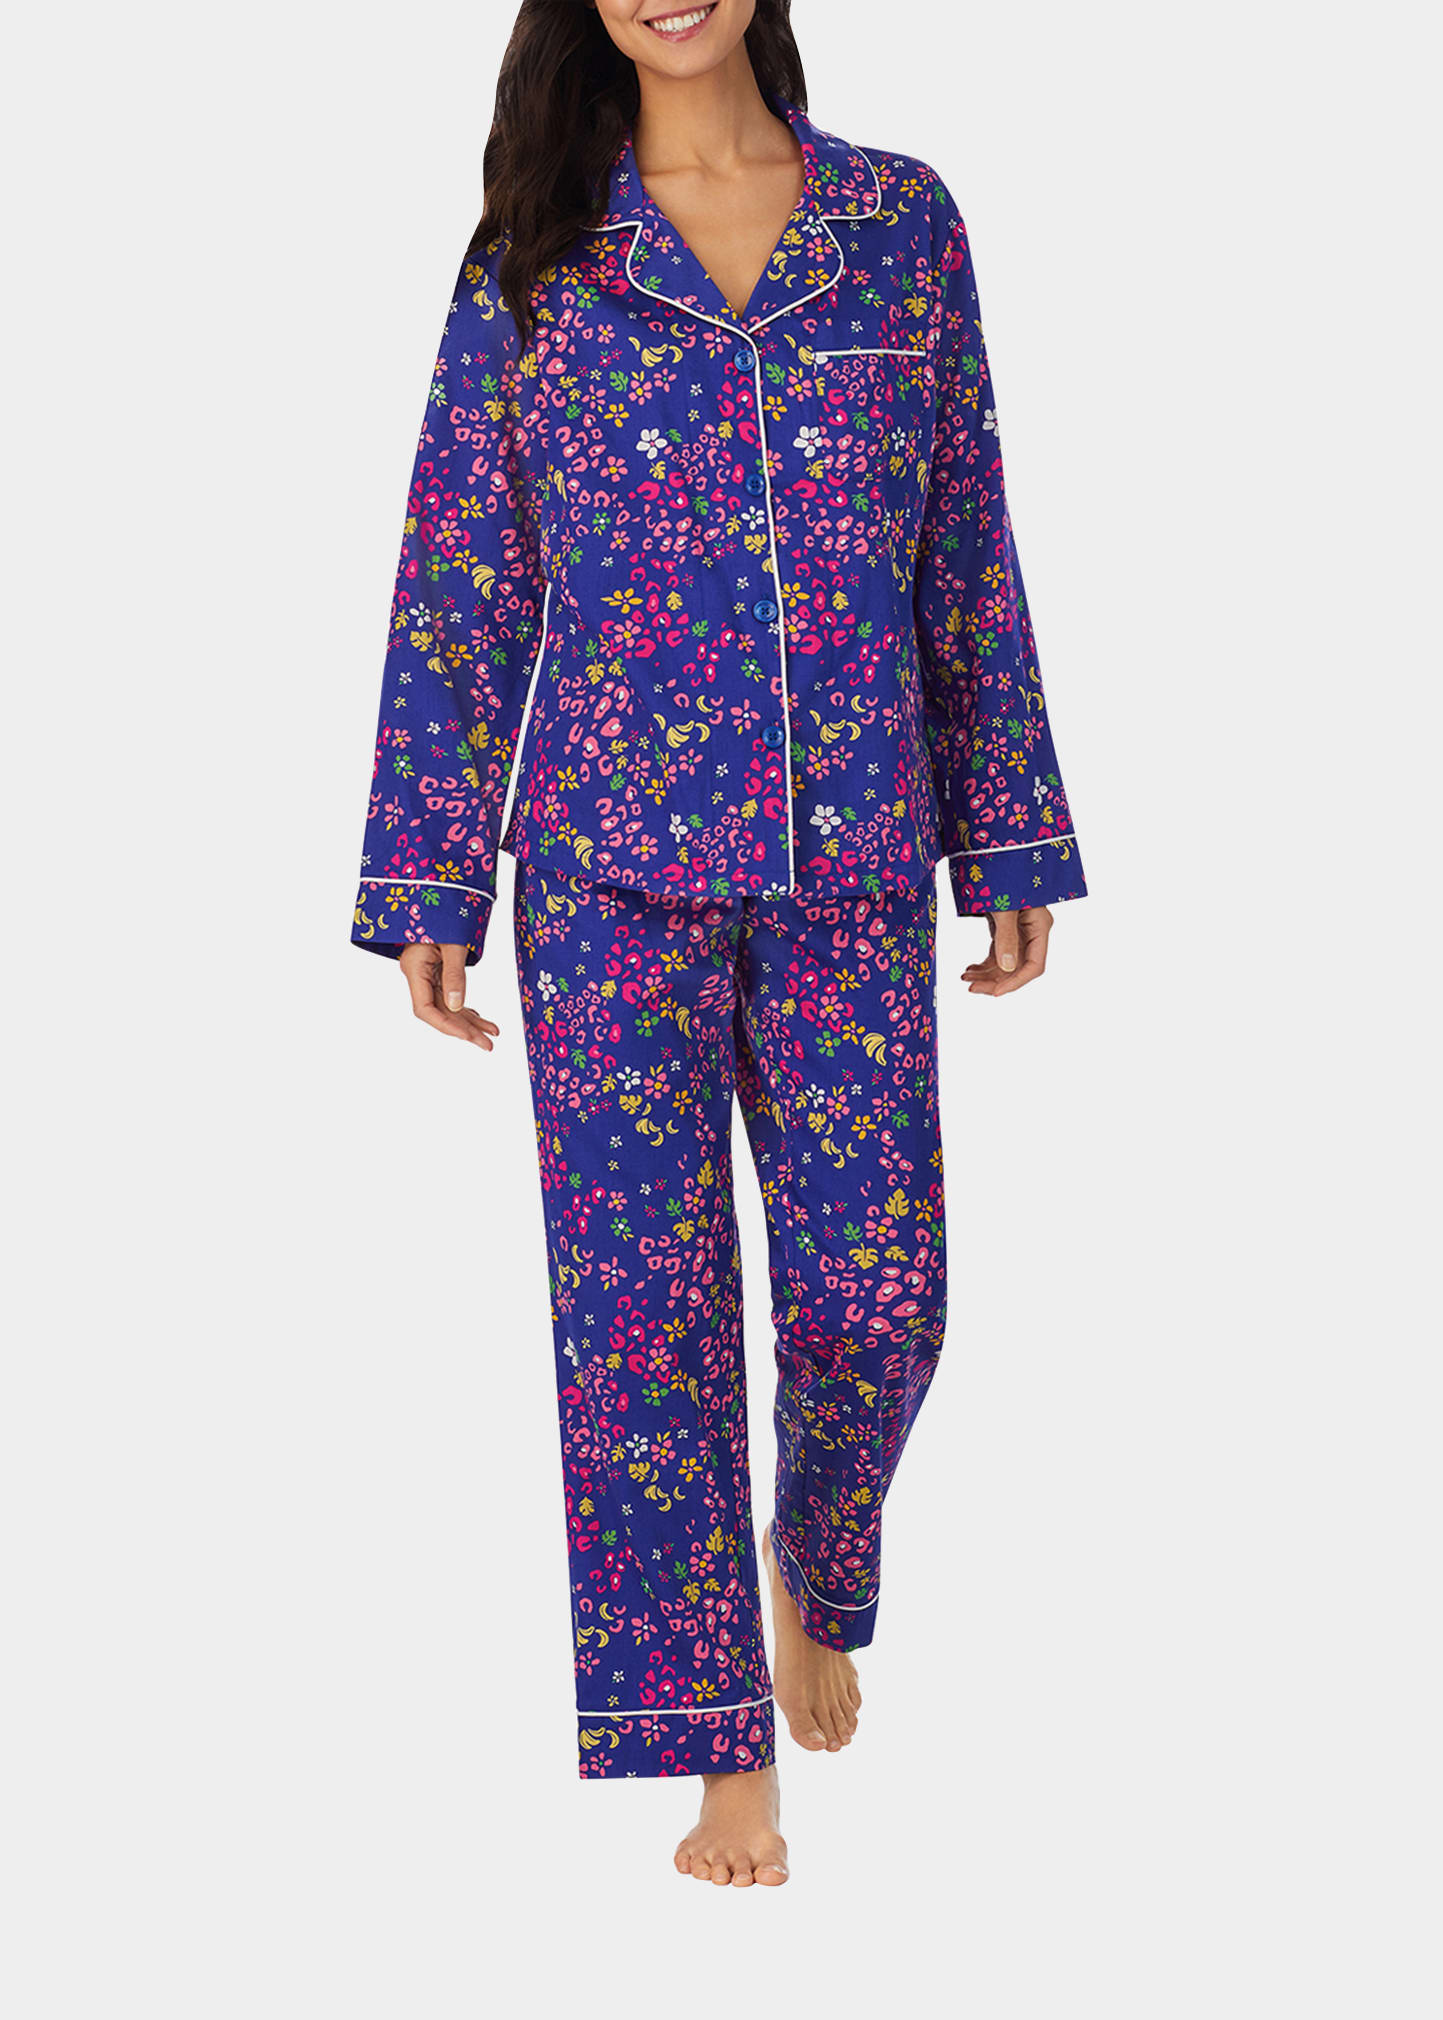 Womens Cotton Blend Pyjamas Ladies Short Sleeve Pjs Set lot Sleepwear Size 6-16 